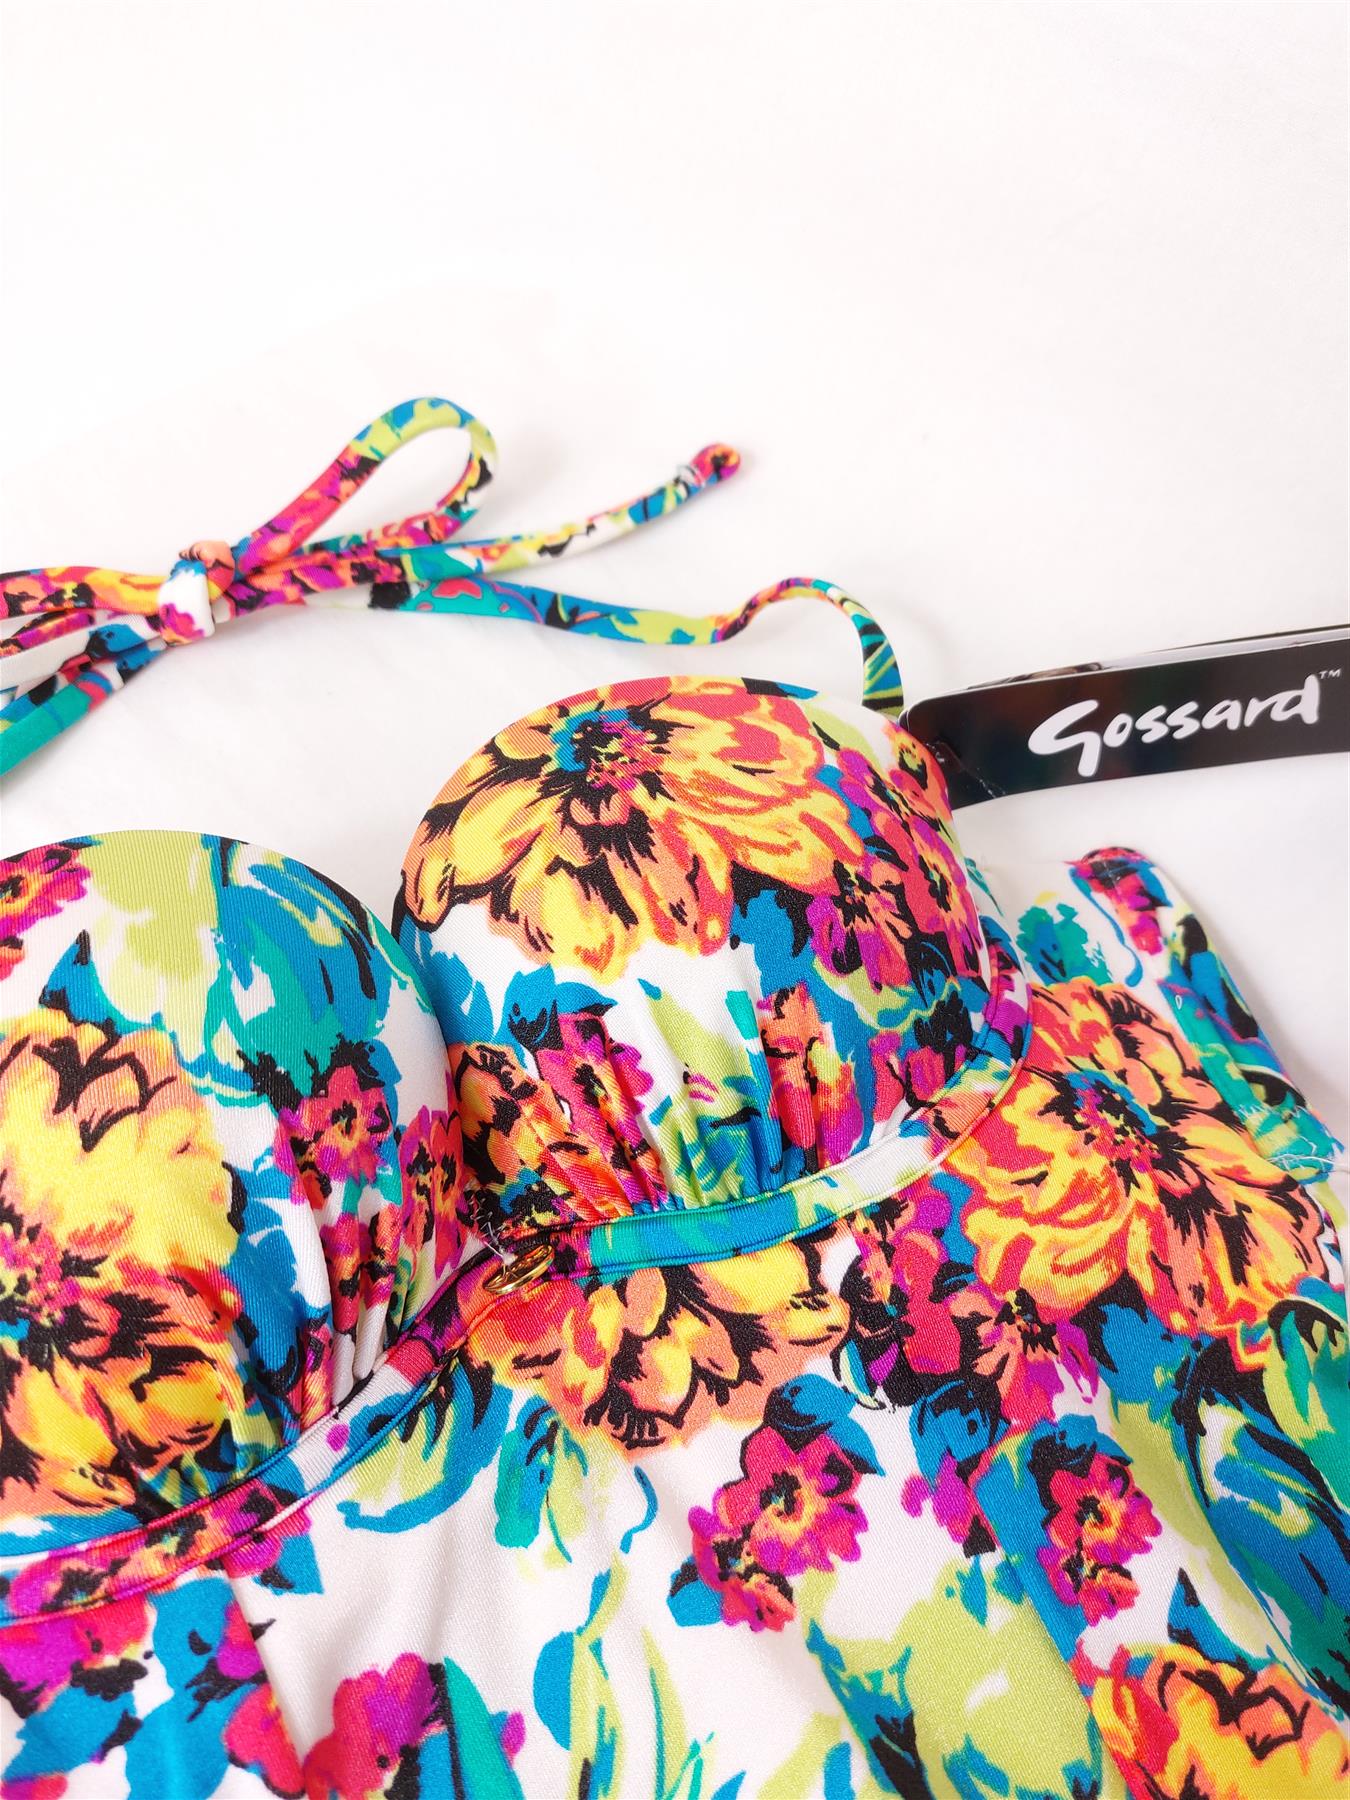 Gossard Hot Tropic Strapless Swimsuit 5359